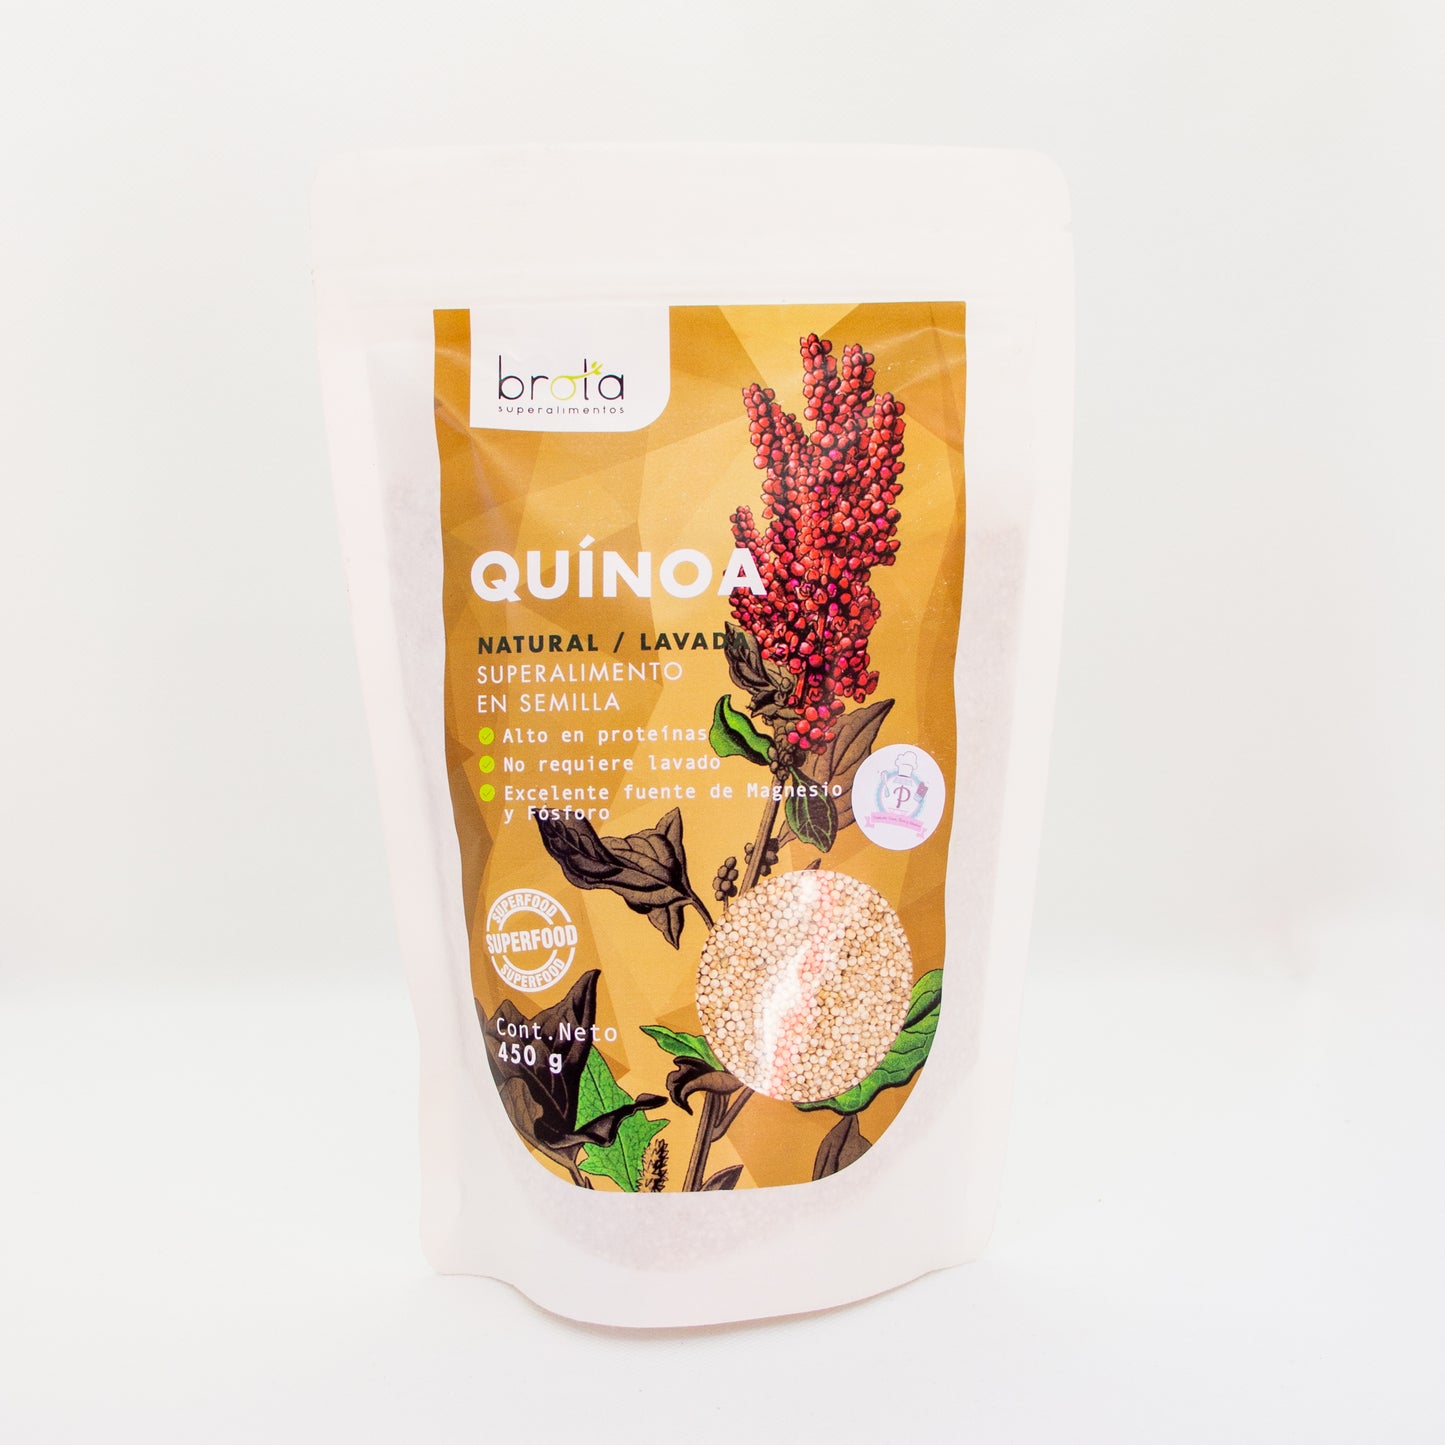 Quinoa real antiplánica blanca lavada "Brota" - 450gr